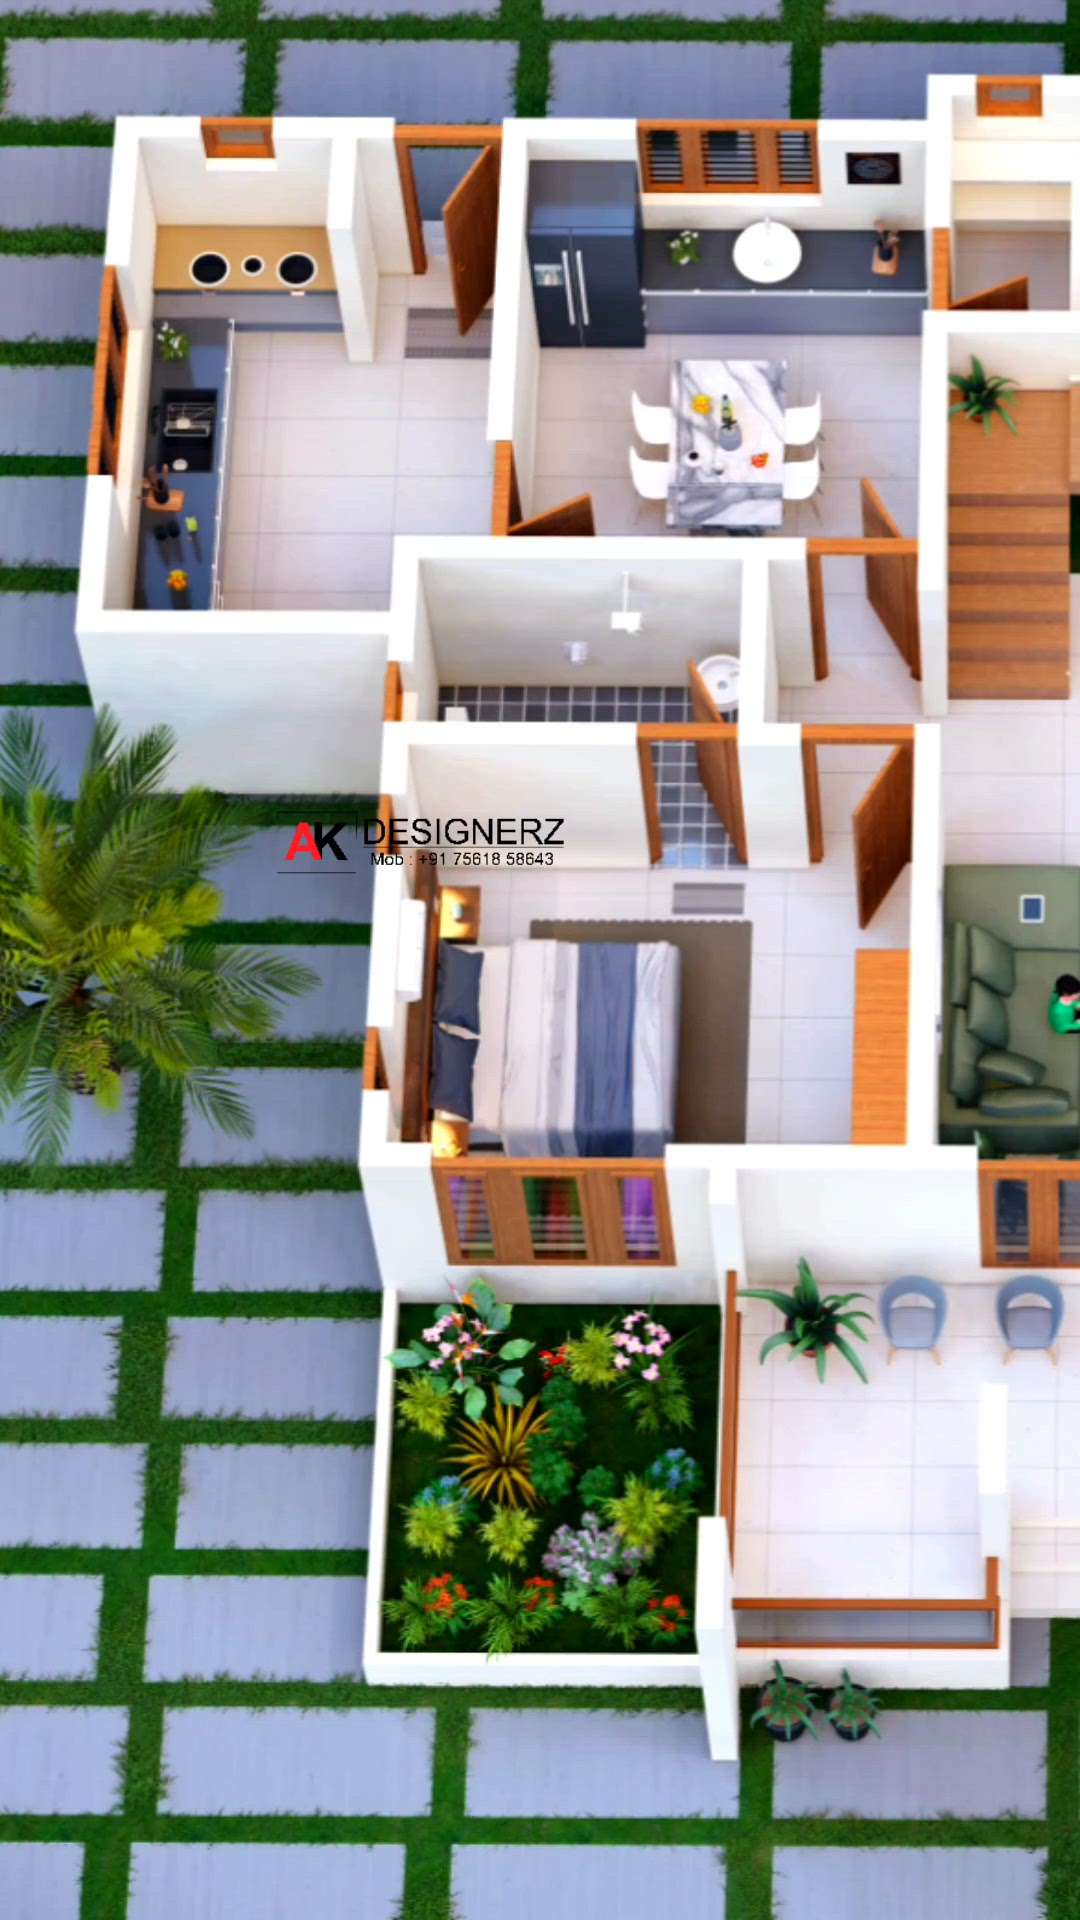 🏠 Home' . Cont : 7561858643
3D floor Plan..
Area __ 1446sq

Contact: 7561858643

📍Dm Us For Any Design @ak_designz____

Contact me on whatsapp
📞7561858643

#designer_767 #house #housedesign #housedesigns #residentionaldesign #homedesign #residentialdesign #residential #civilengineering #autocad #3ddesign #arcdaily #architecture #architecturedesign #architectural #keralahome
#house3d #keralahomes  #budget_home_simple_interi #budjecthomes #budgetplans 
@kolo.kerala @archidesign.kerala @archdaily

#budgethomes #ElevationHome #SmallBudgetRenovation #budgethomeplan #budgethouses #budgetprice
#render3d3d #3Dfloorplans #3dflooring #3dfloor